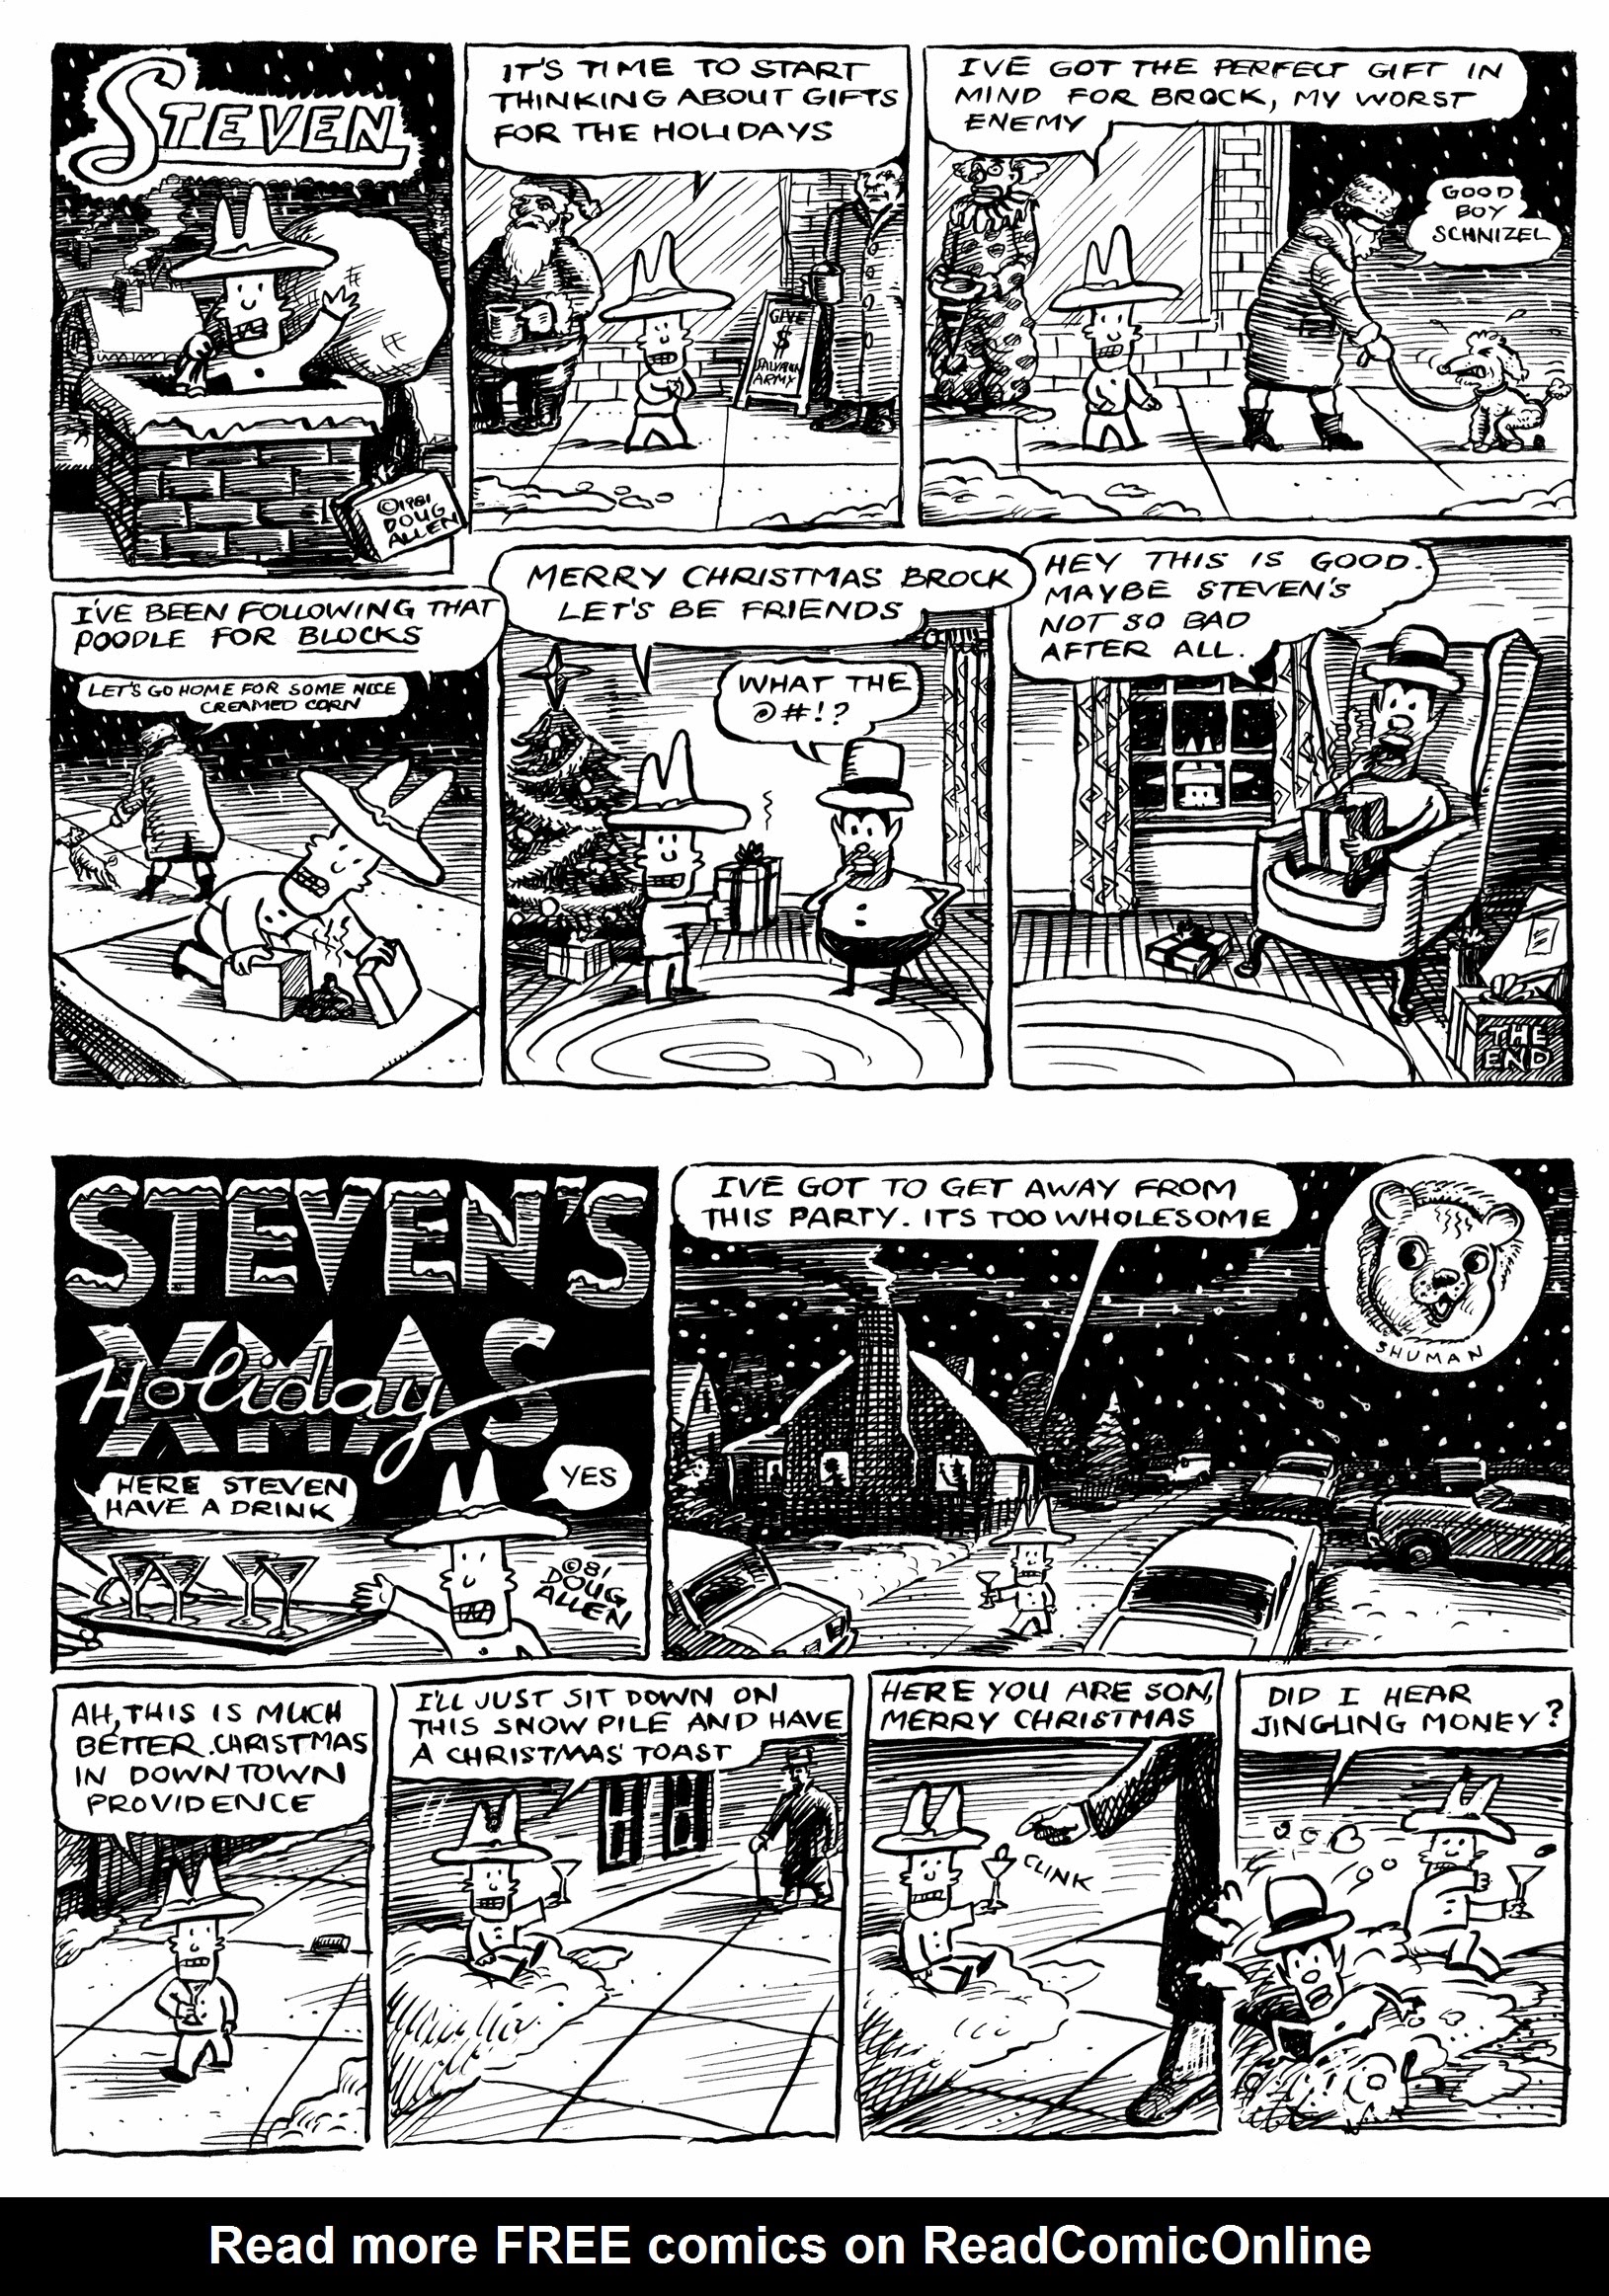 Read online Steven comic -  Issue #1 - 4